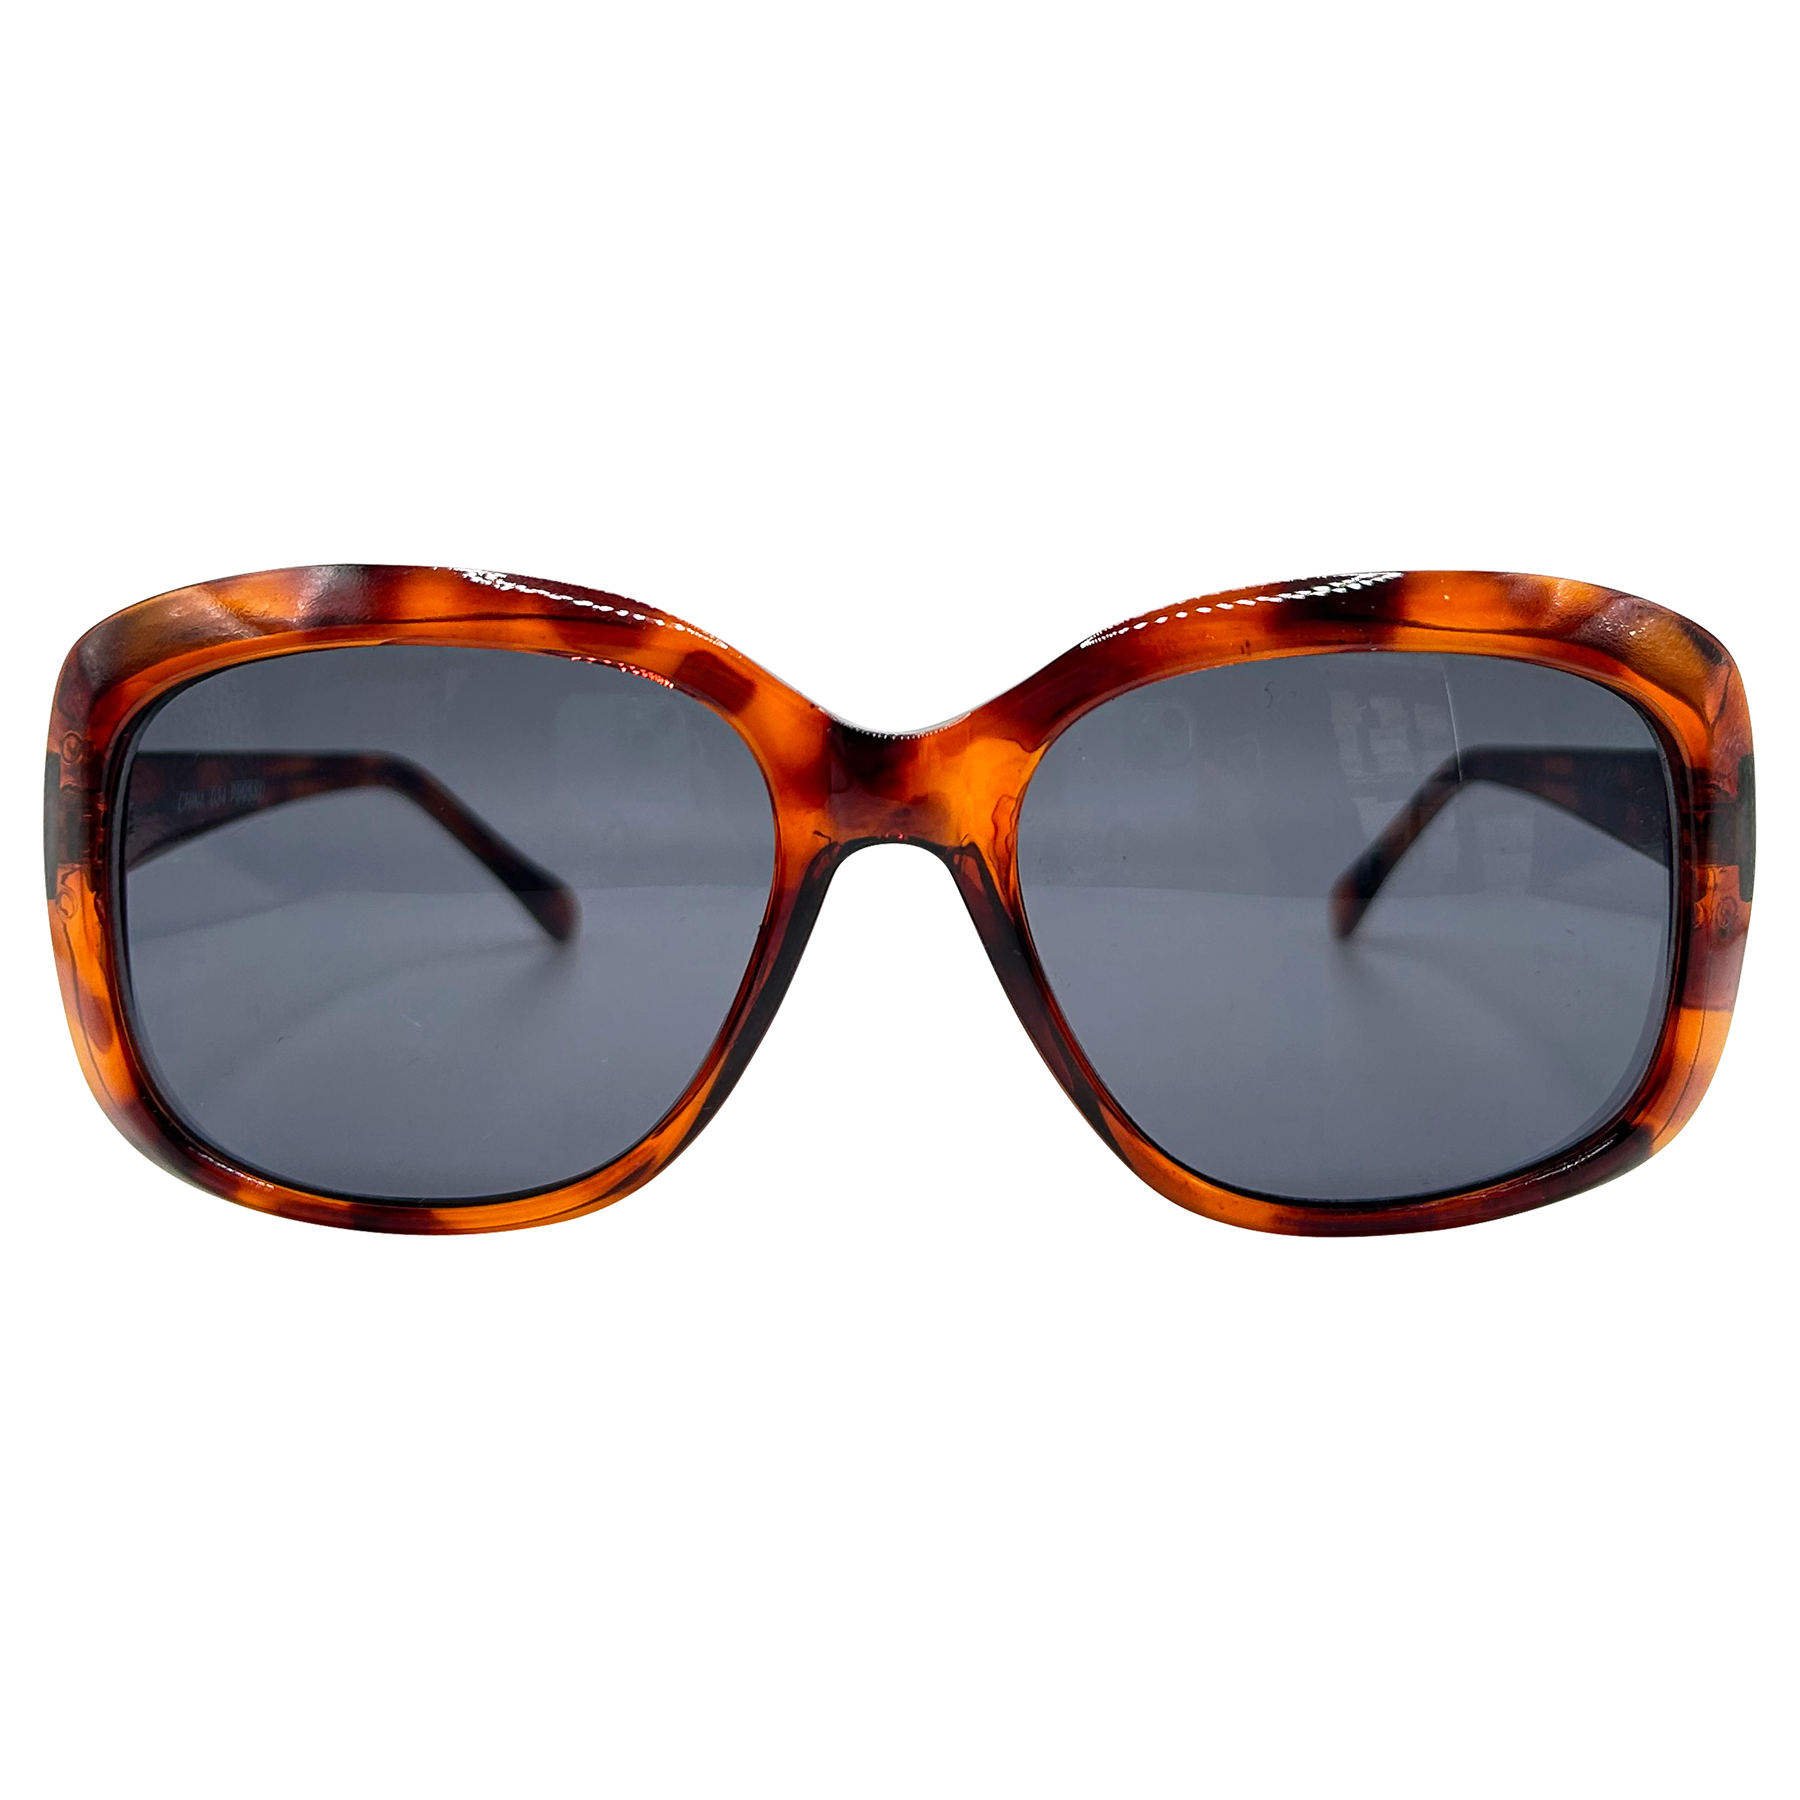 Shop Blake Tortoise/Super Dark Square Vintage Sunglasses